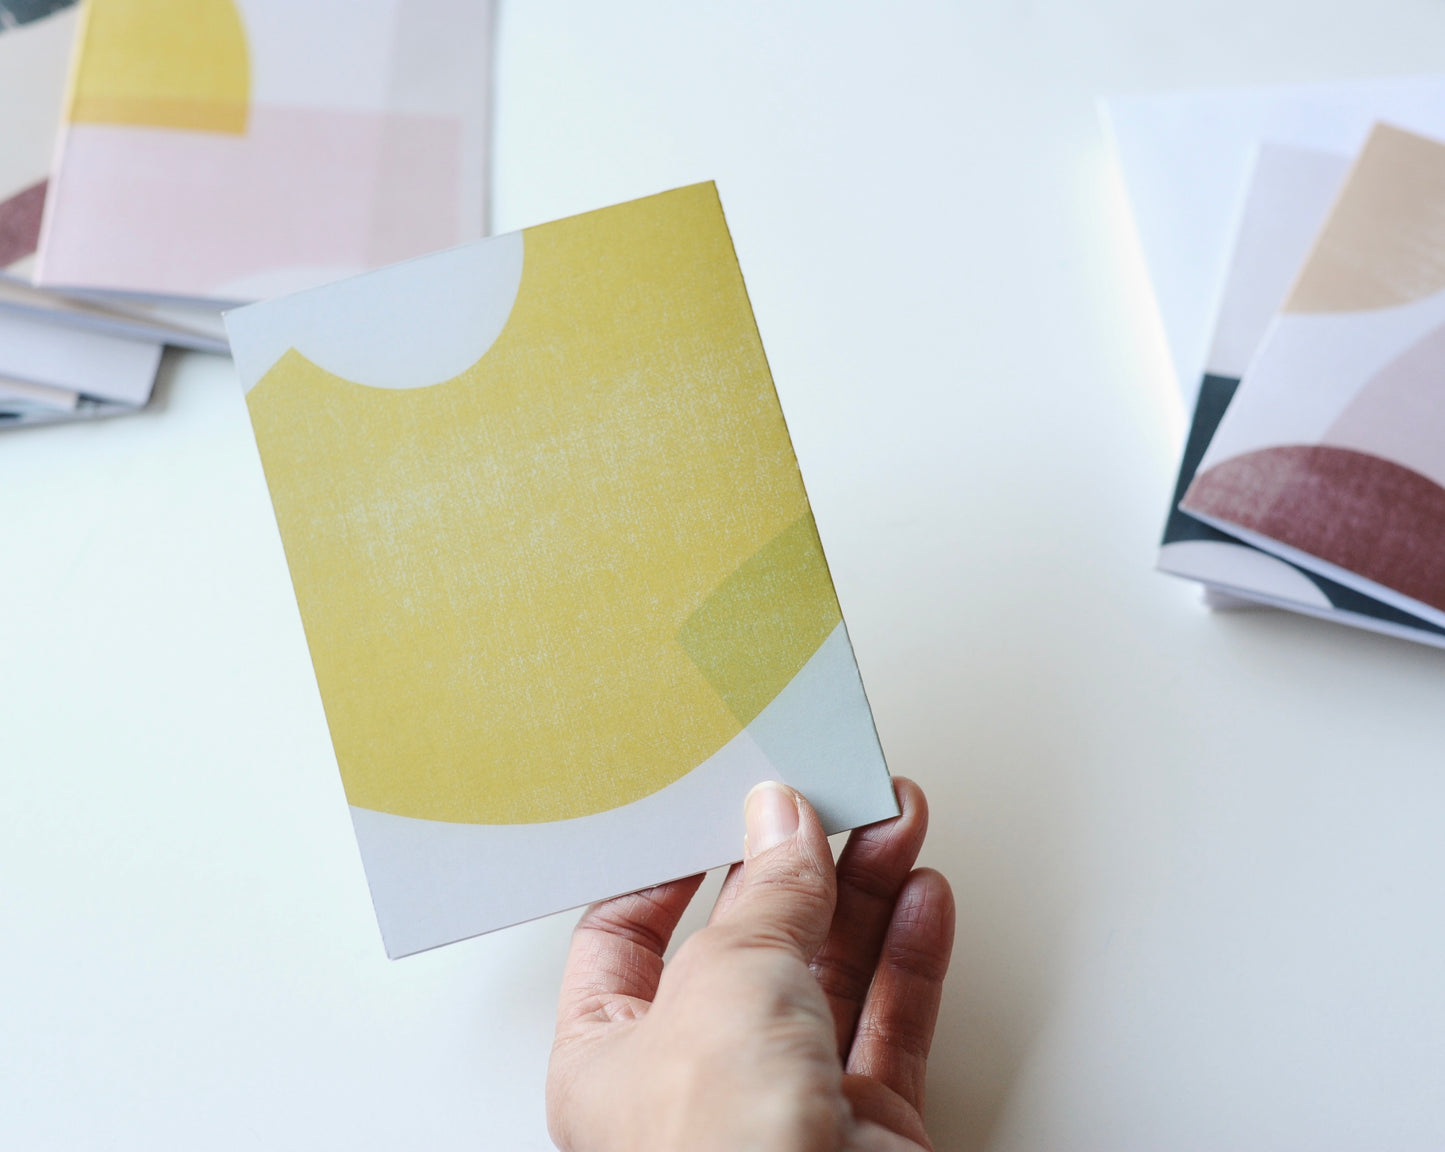 Blank Cards - Set of 12 - Modern Art Size A2 Notecards